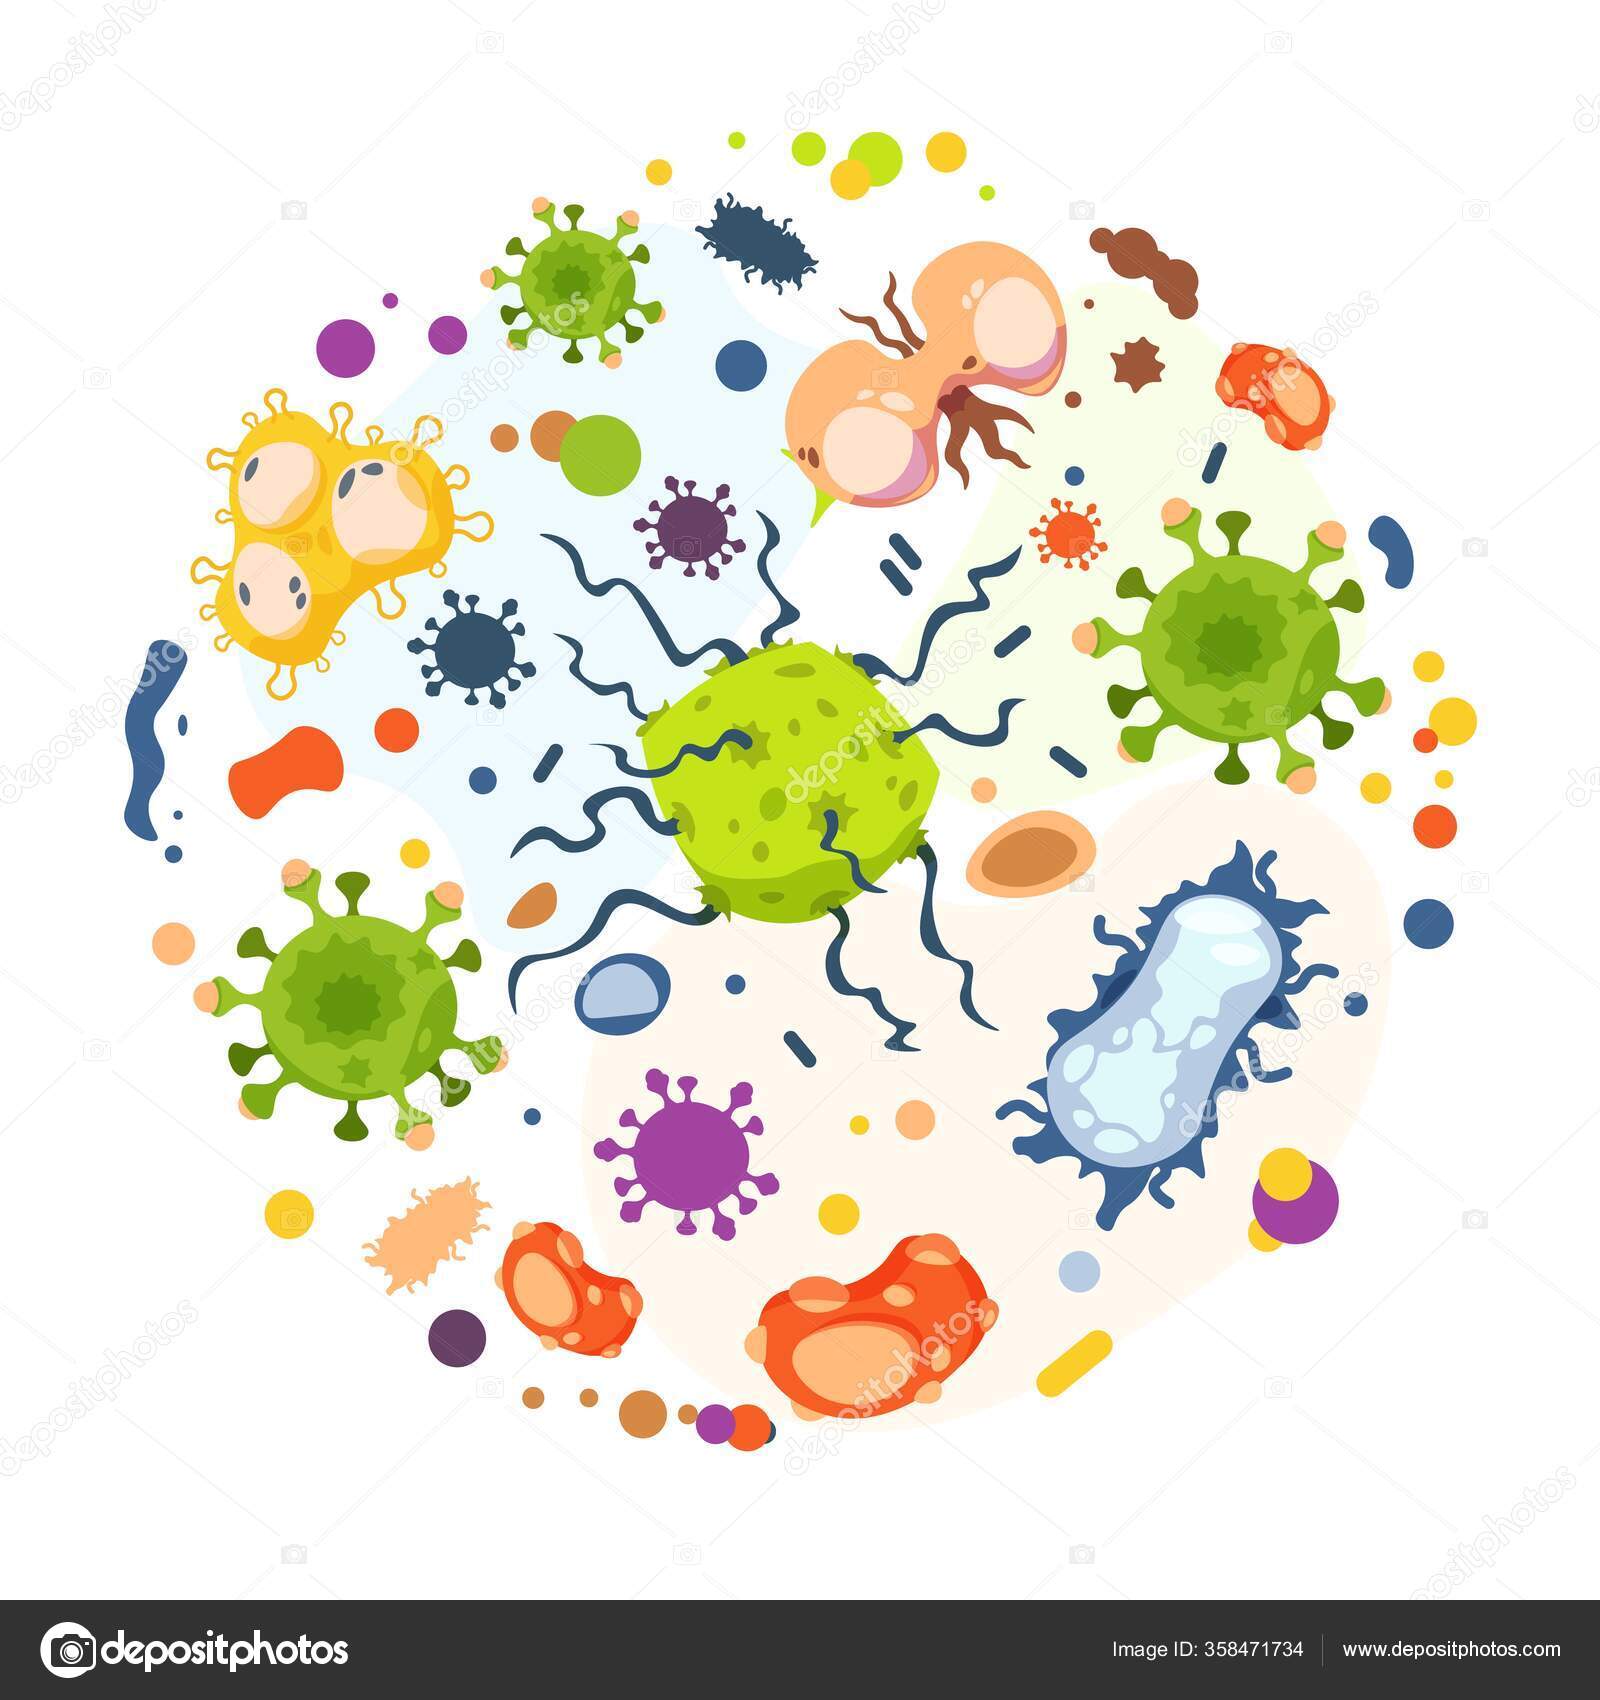 ©SpicyTruffel　ストックベクター　358471734　漫画の細菌。ウイルス感染症、サークル内のインフルエンザ菌や微生物、癌細胞や流行病菌。ベクトル分離集合　—